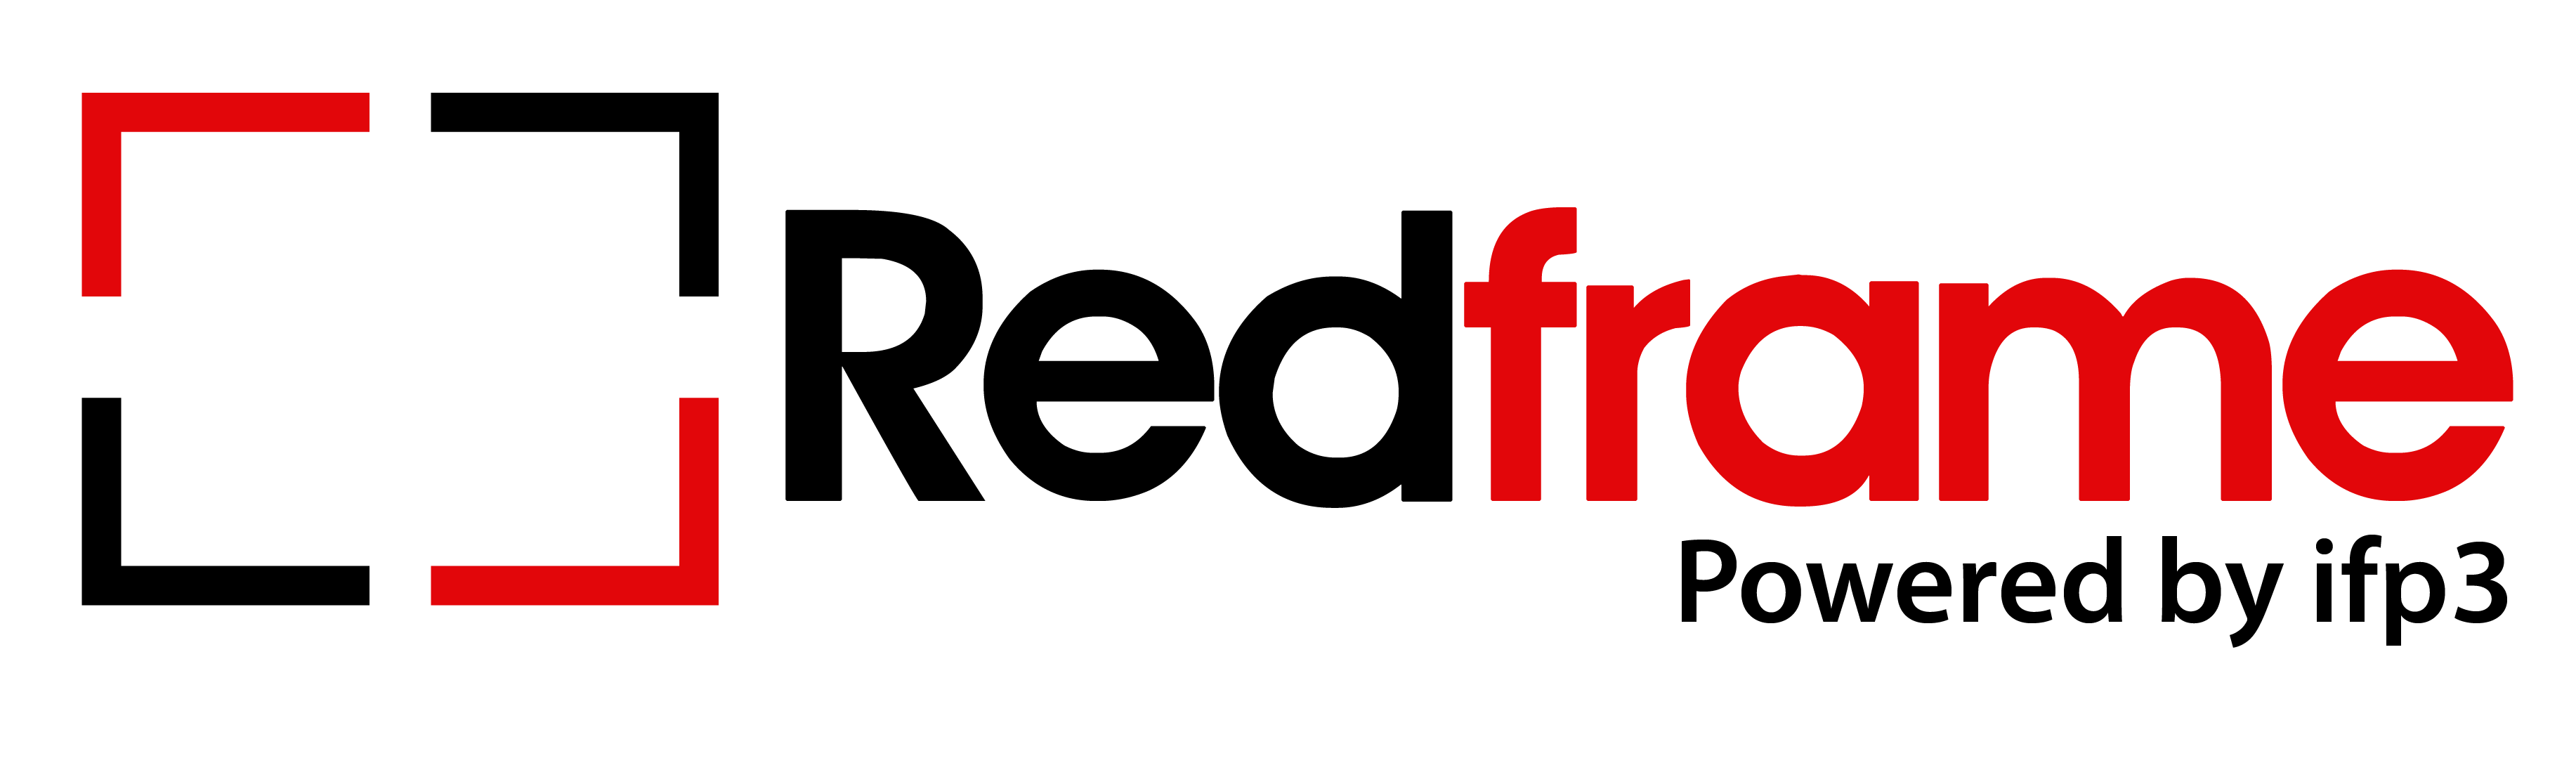 Red Frame Logo photo - 1